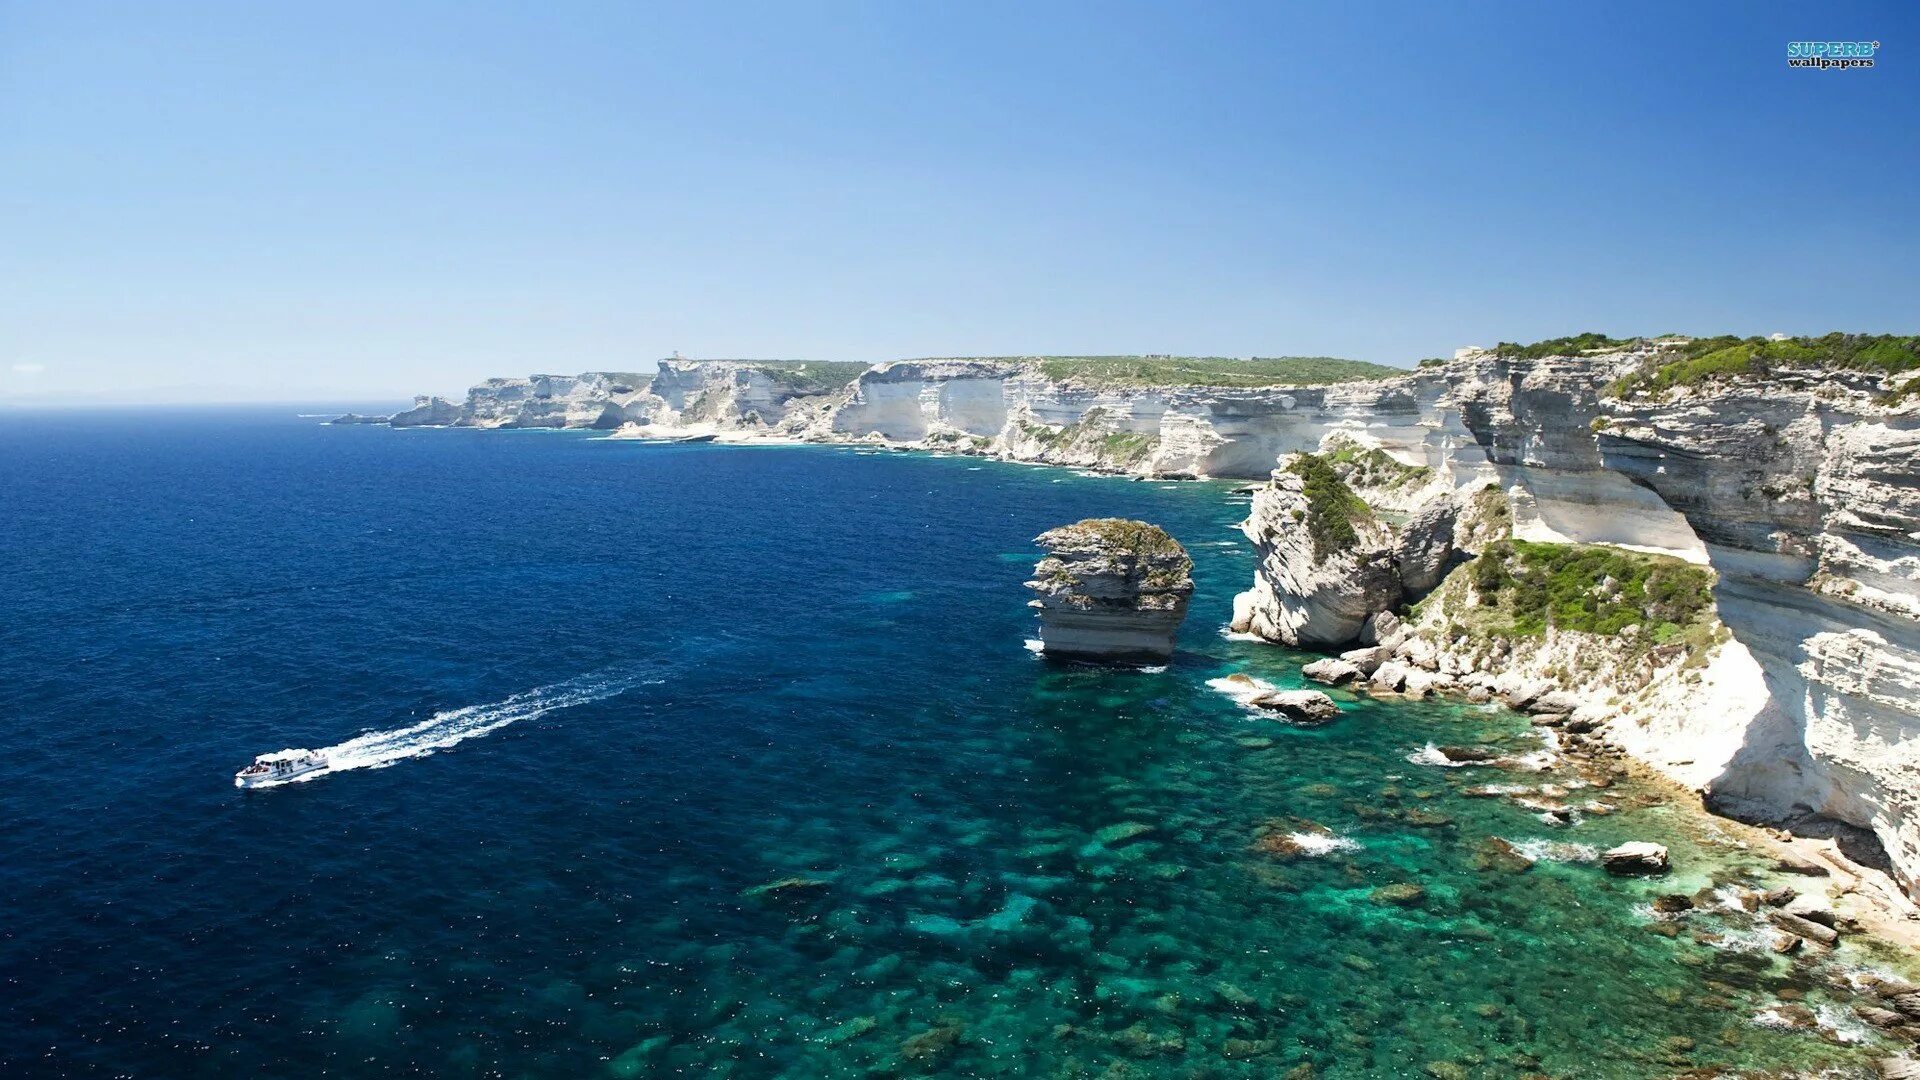 Остров Корсика во Франции. Ионическое море, Средиземноморье. Греция Корсика. Корсика остров в Средиземном. Побережье средиземноморья